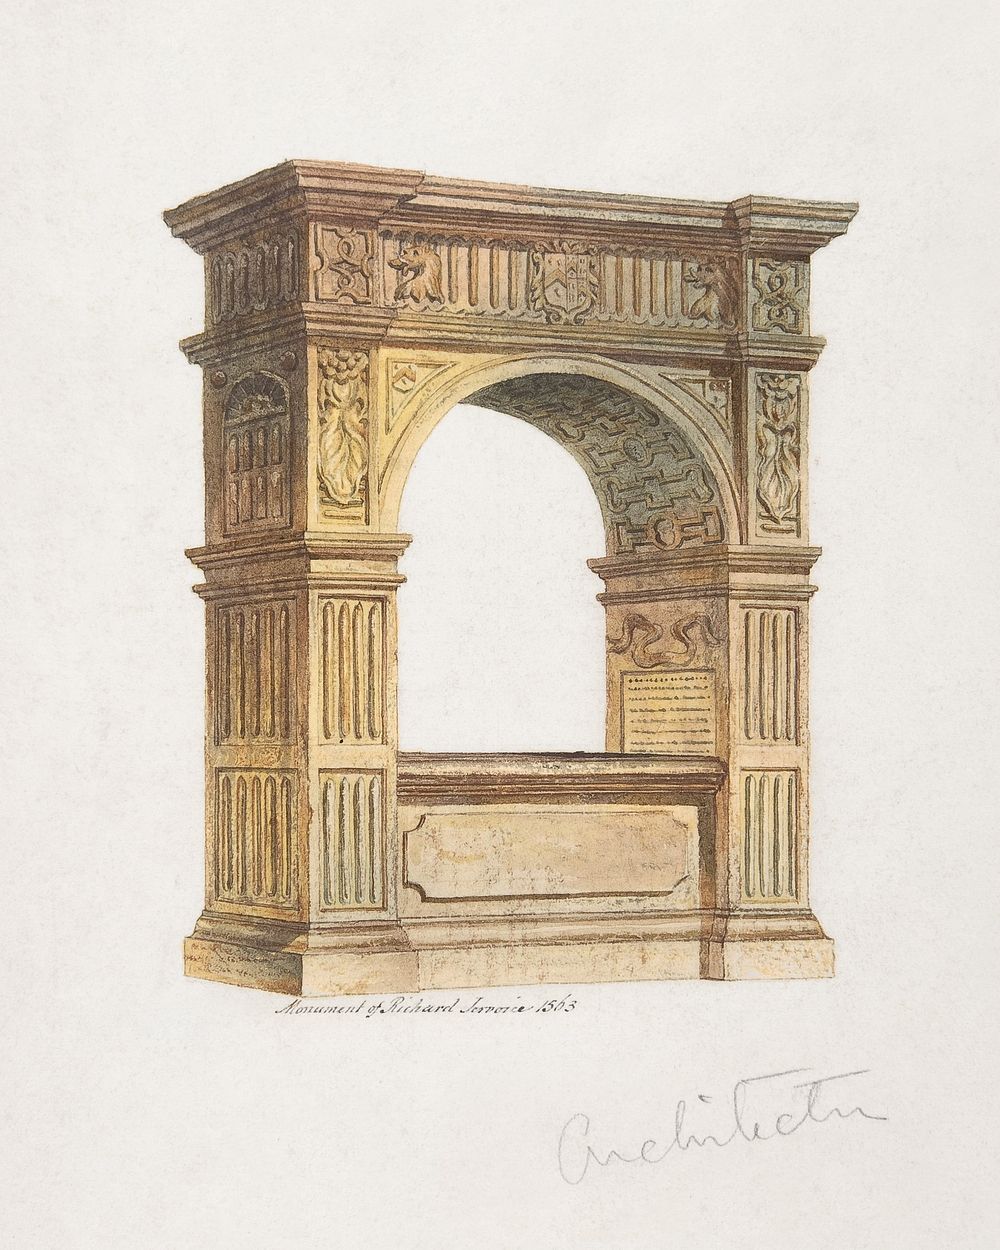 Monument of Richard Jervoice, 1563 (19th century), vintage architecture illustration. Original public domain image from The…